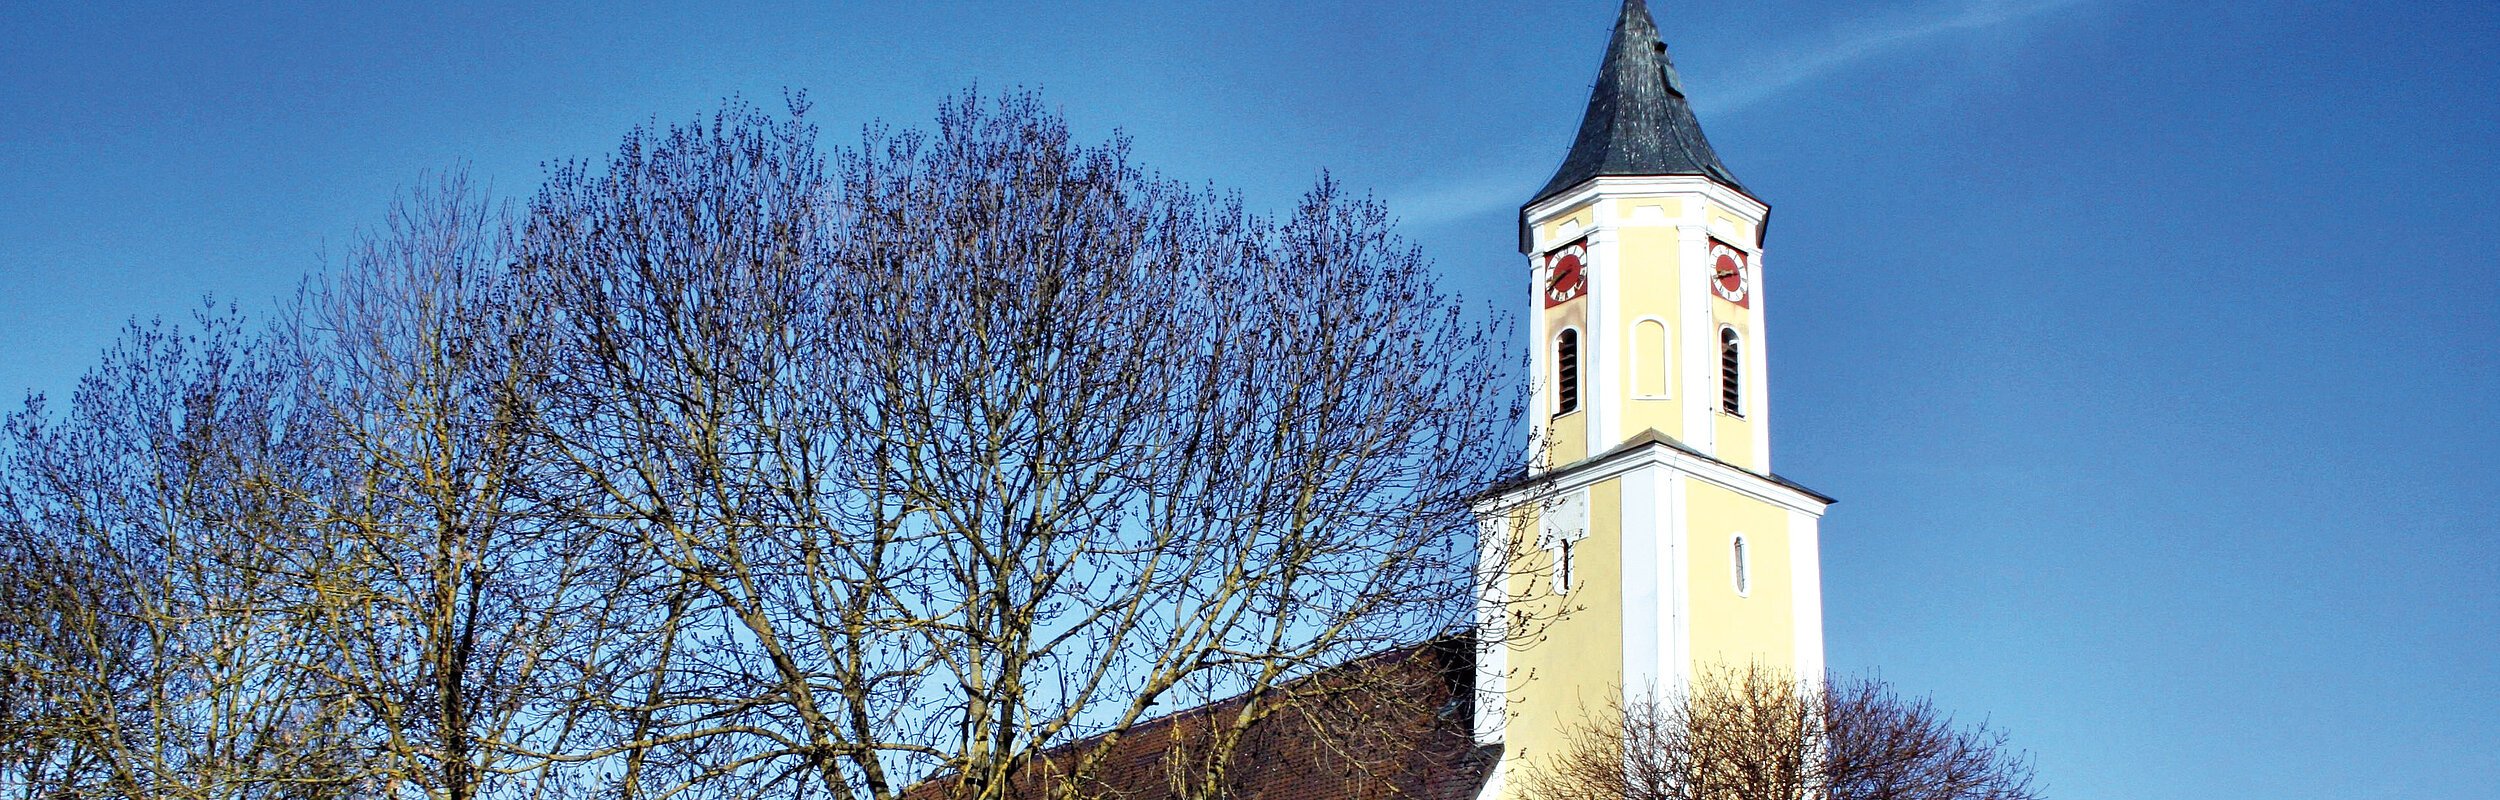 Die Kirche in Otting